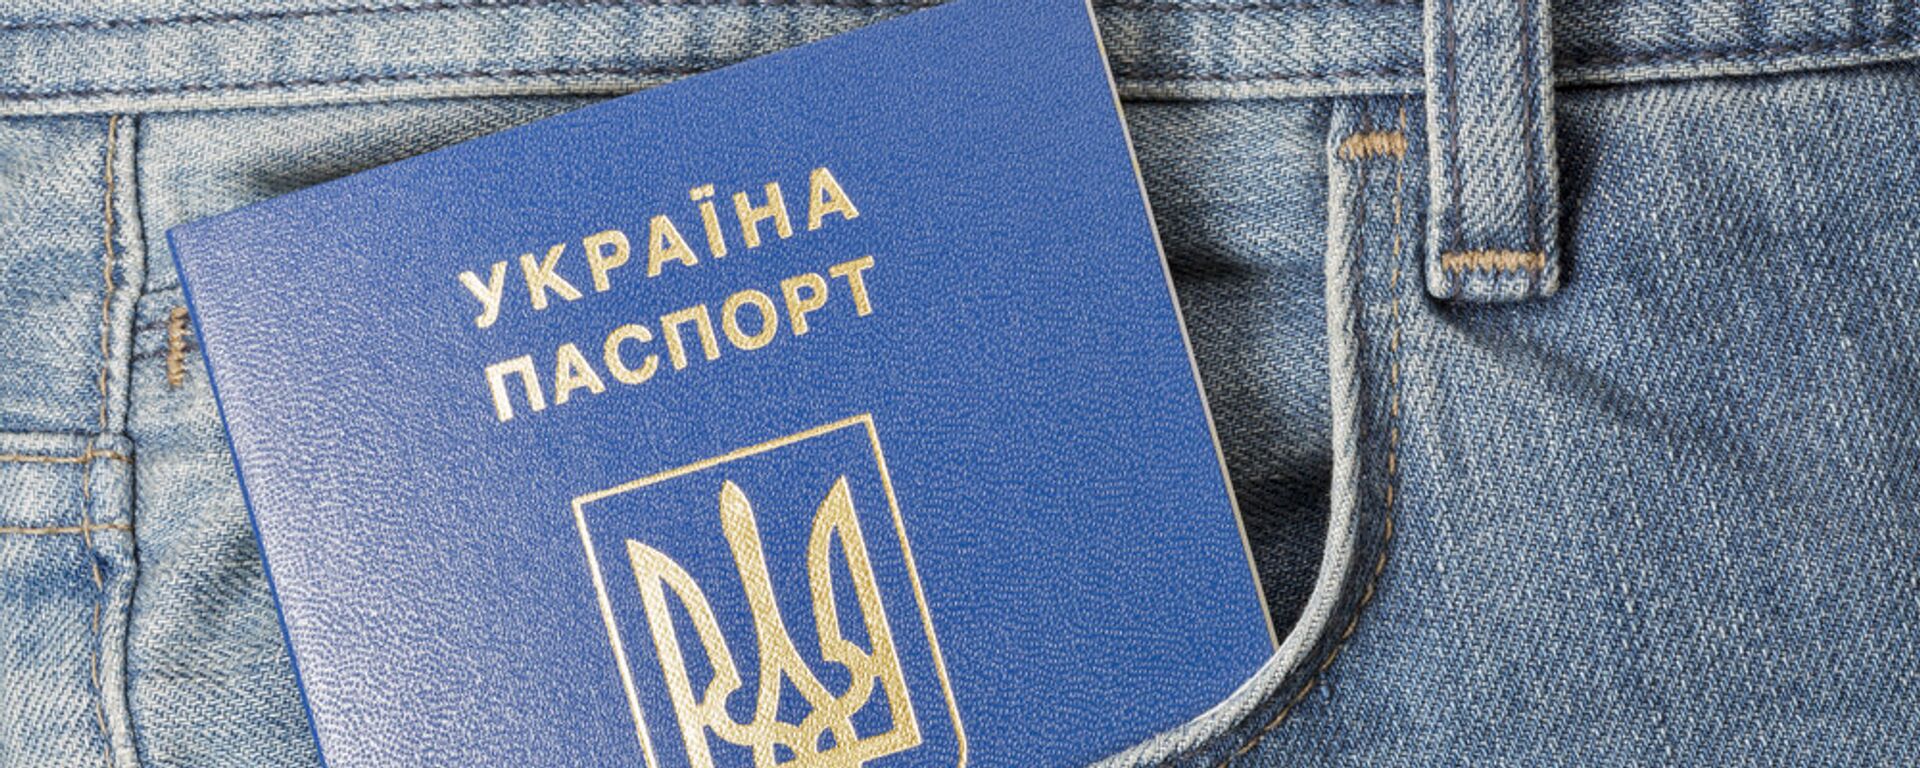 Украинский паспорт в кармане джинсов, архивное фото - Sputnik Литва, 1920, 22.11.2021